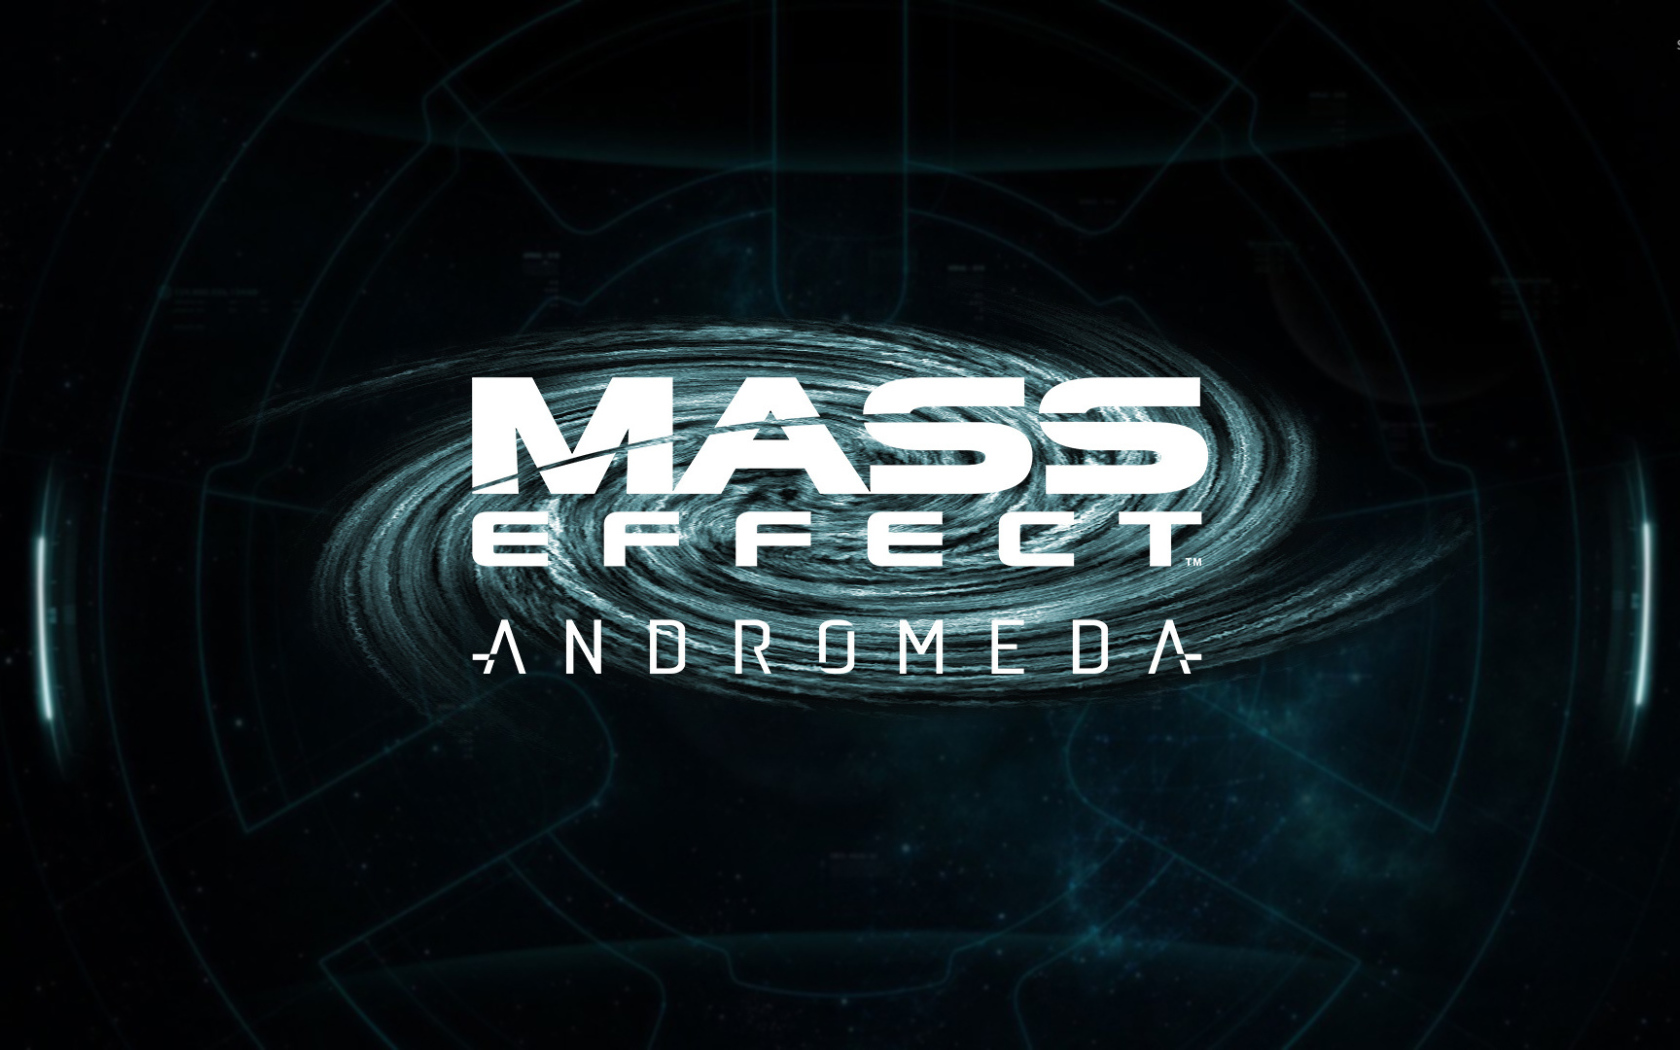 Games Logo Mass Effect Andromeda